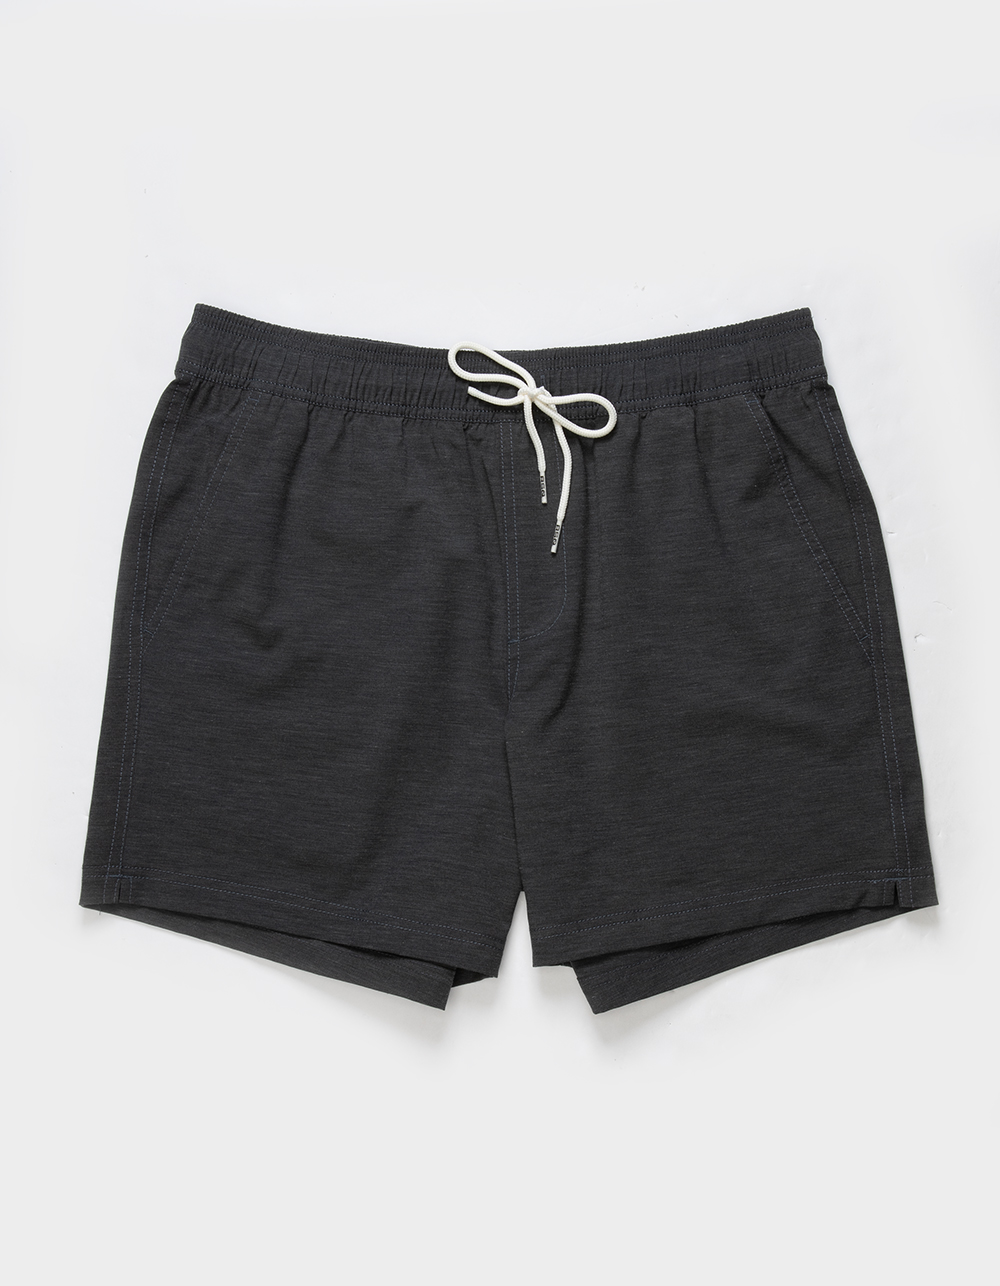 RSQ Mens Vintage Solid 5'' Swim Shorts